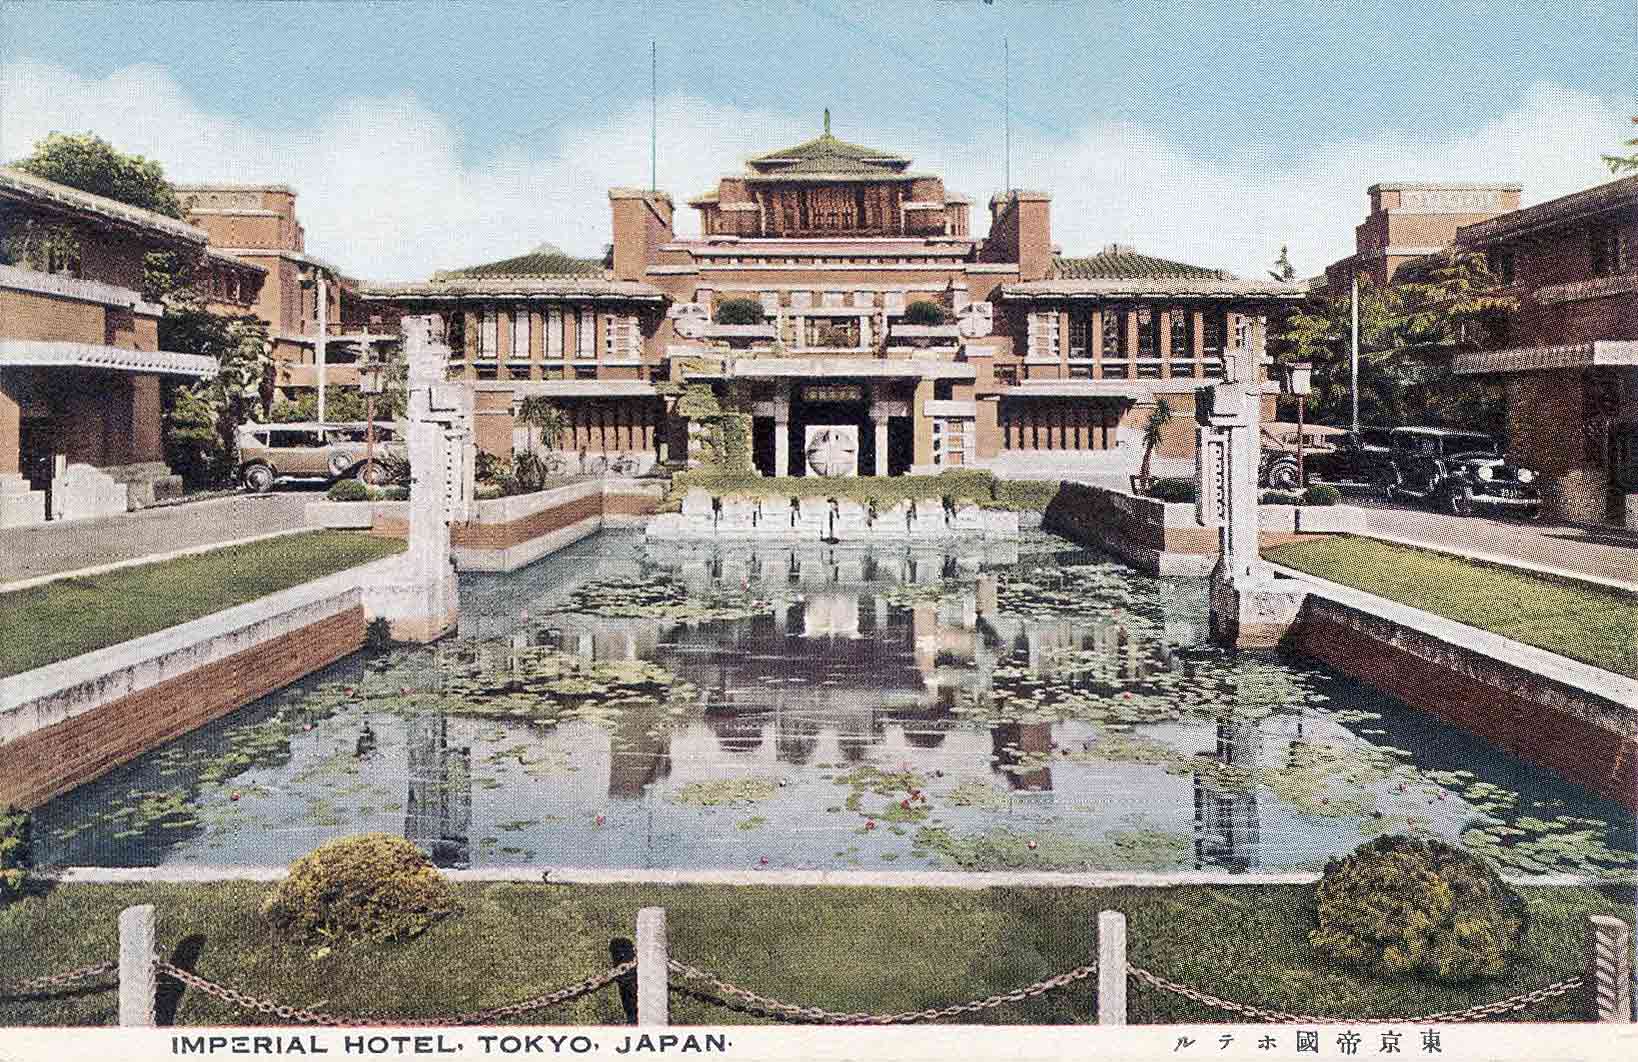 The Imperial Hotel by Frank Lloyd Wright